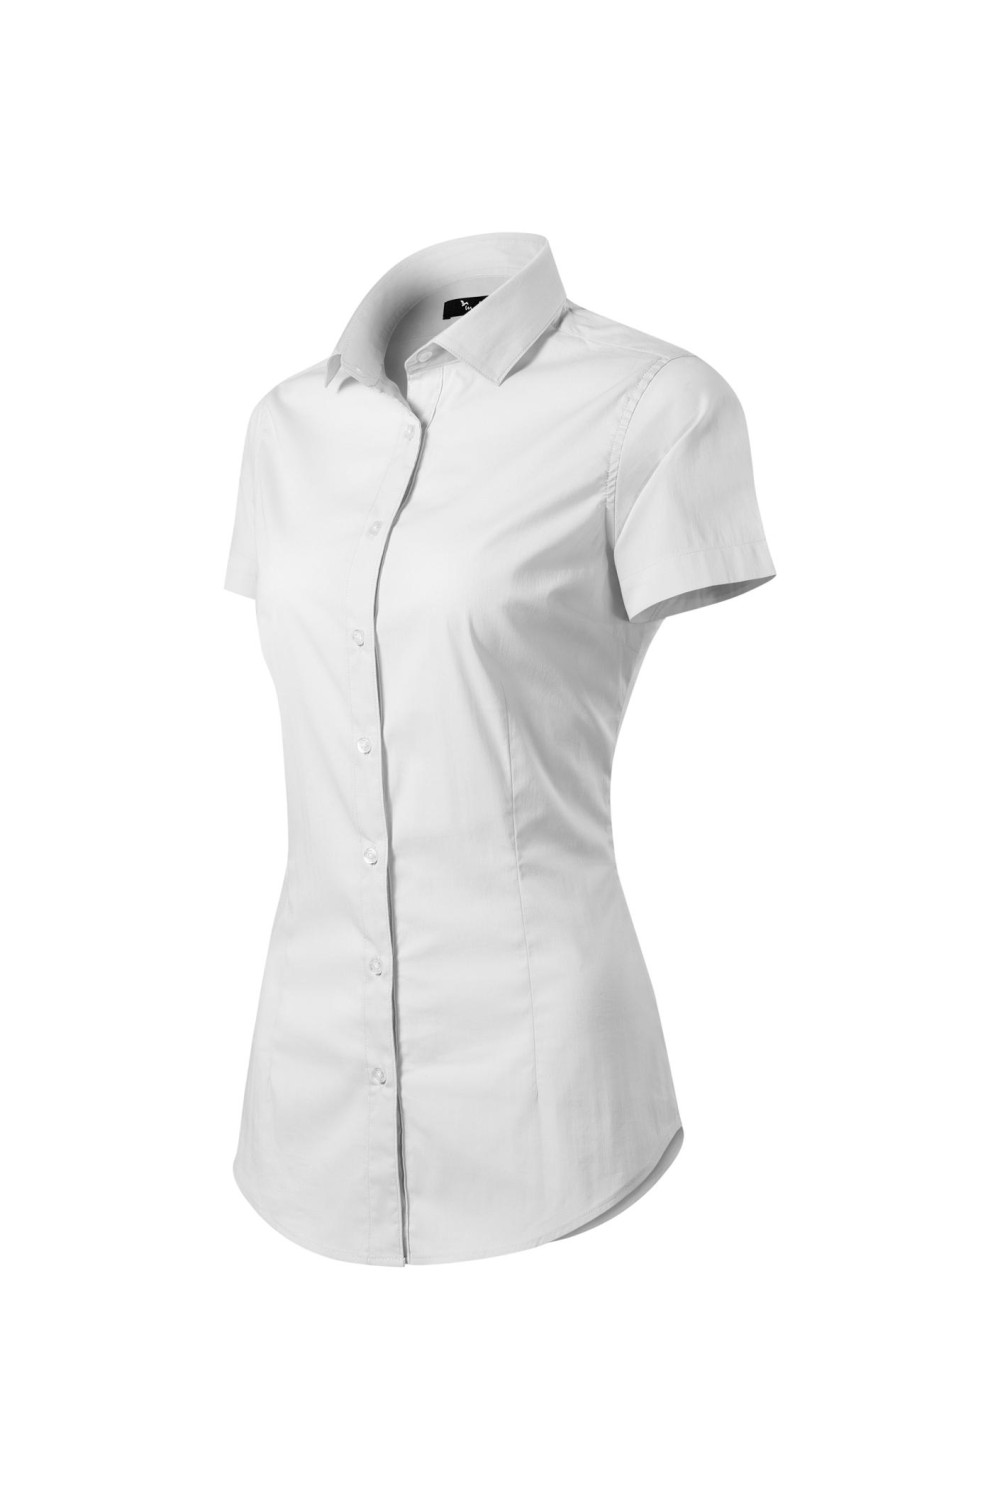 FLASH 261 MALFINI ADLER Koszula damska biały